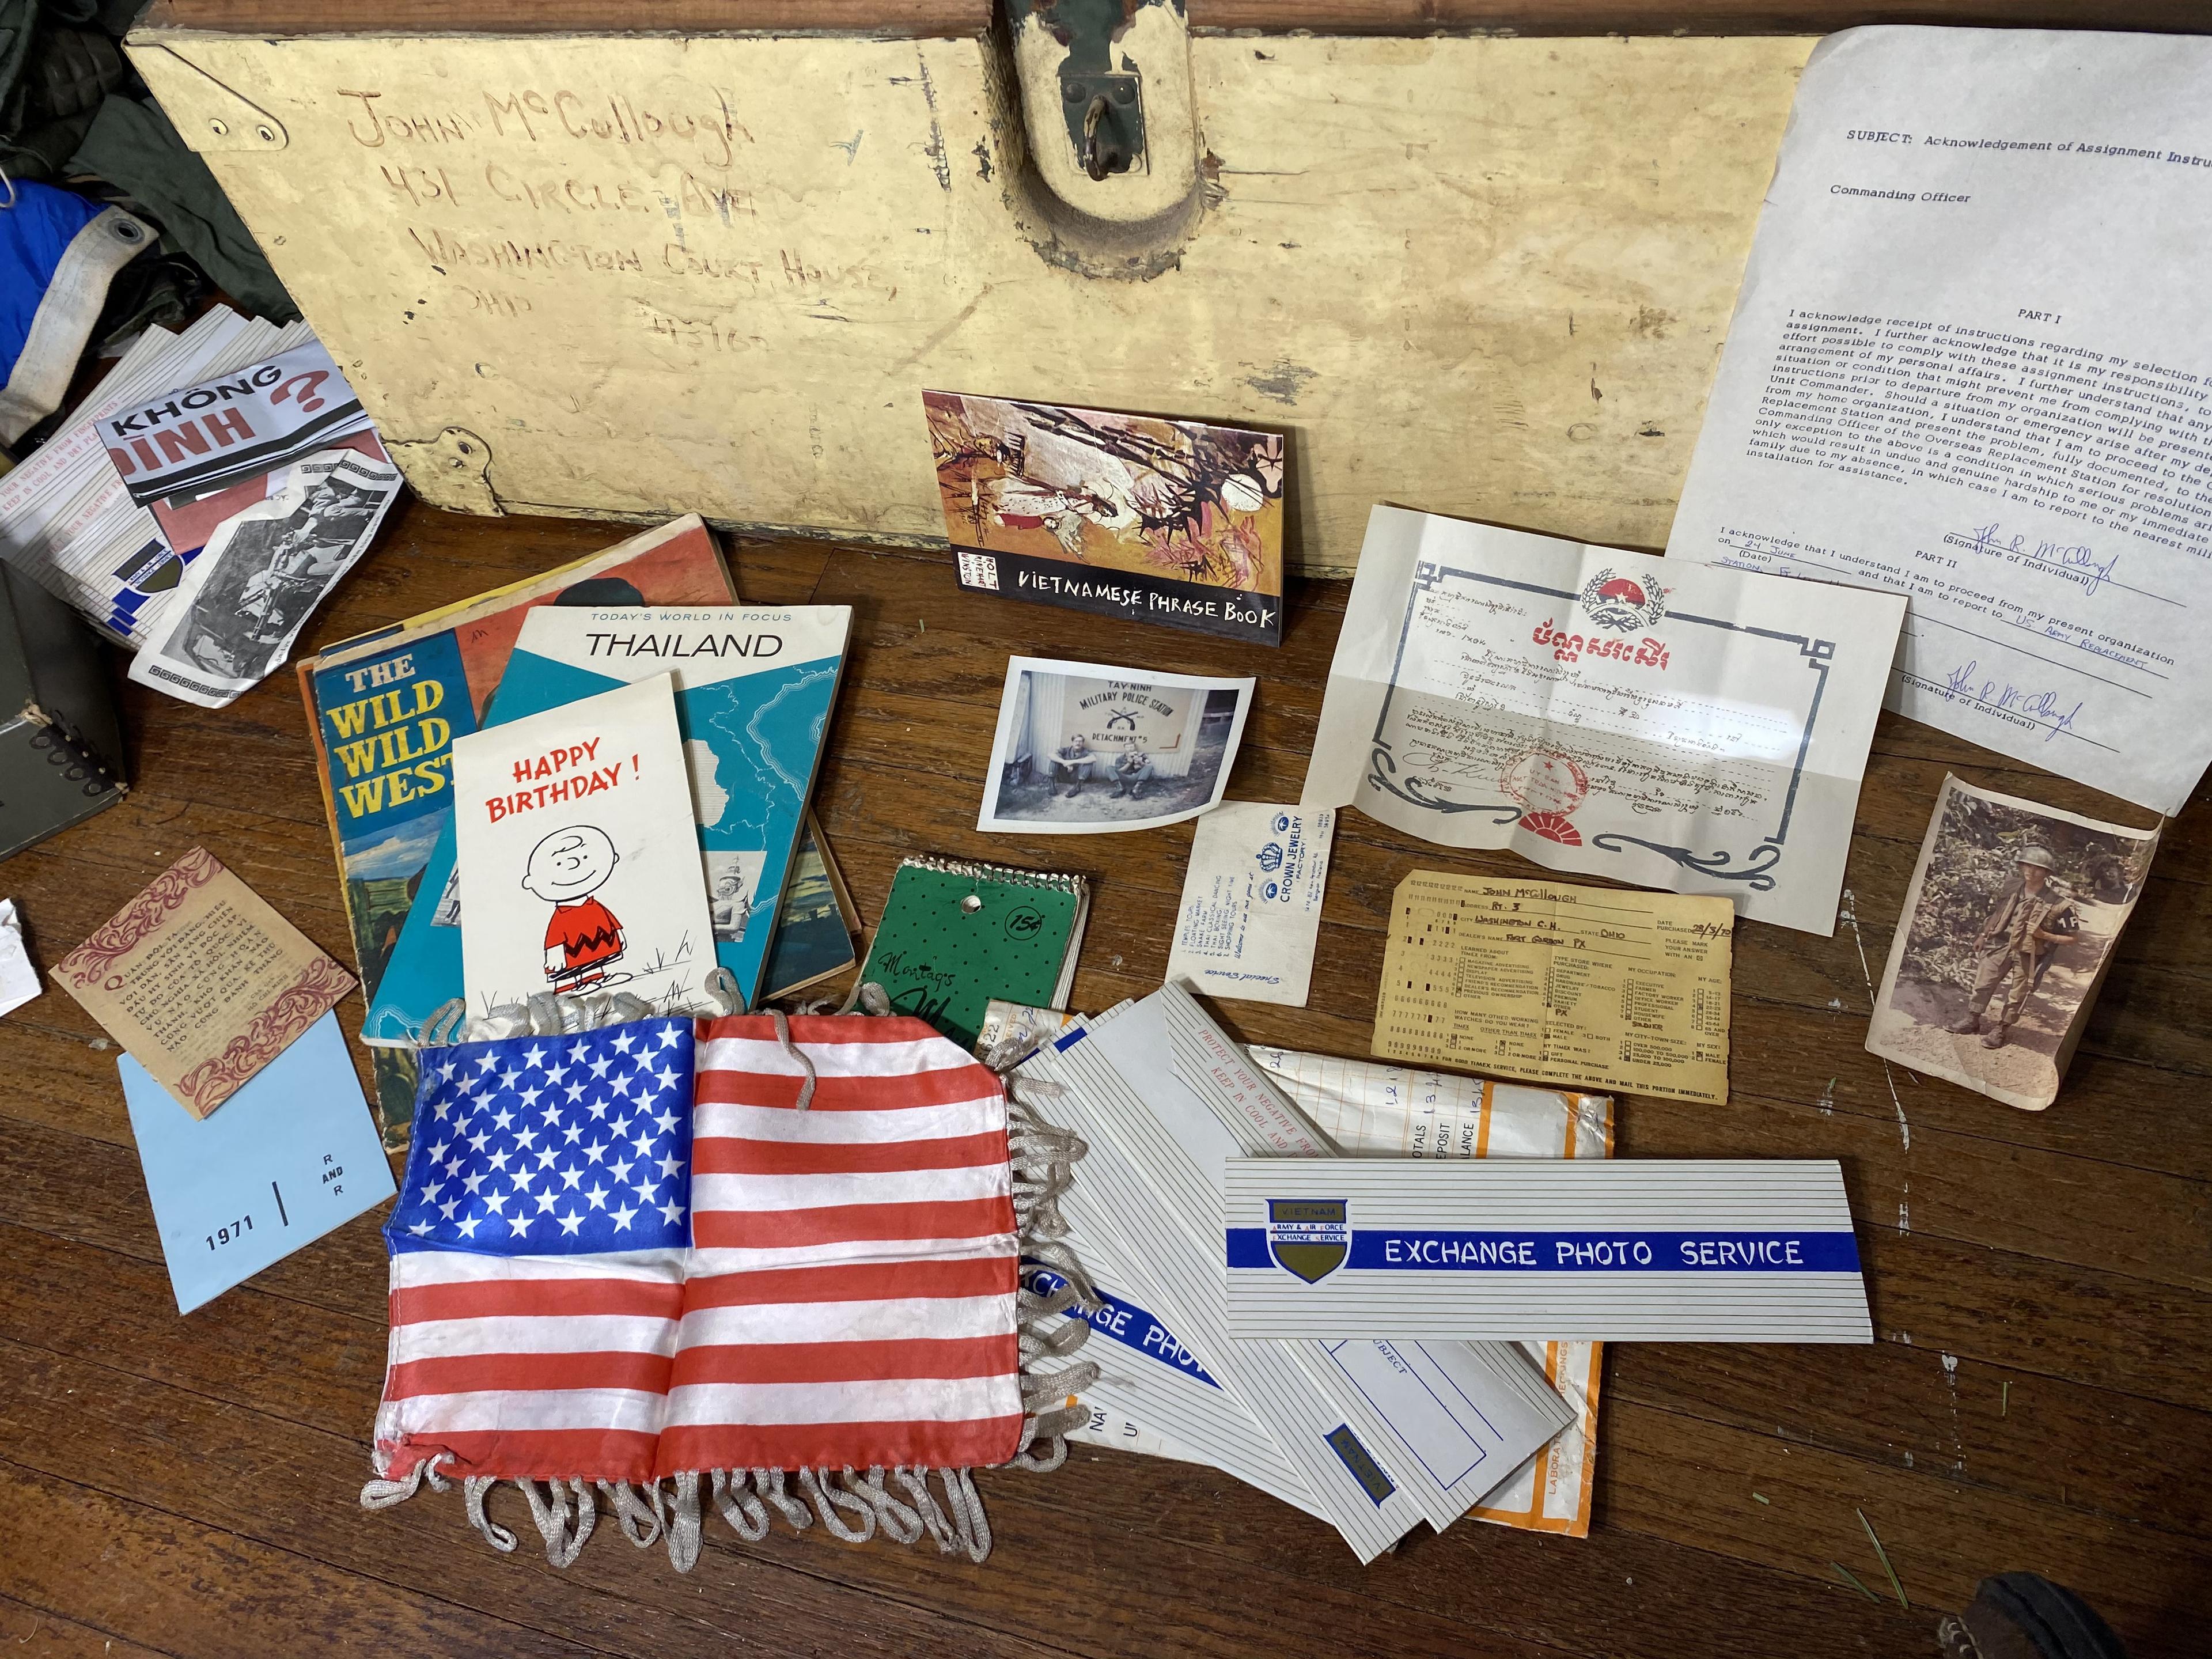 Remarkable Vietnam War archive